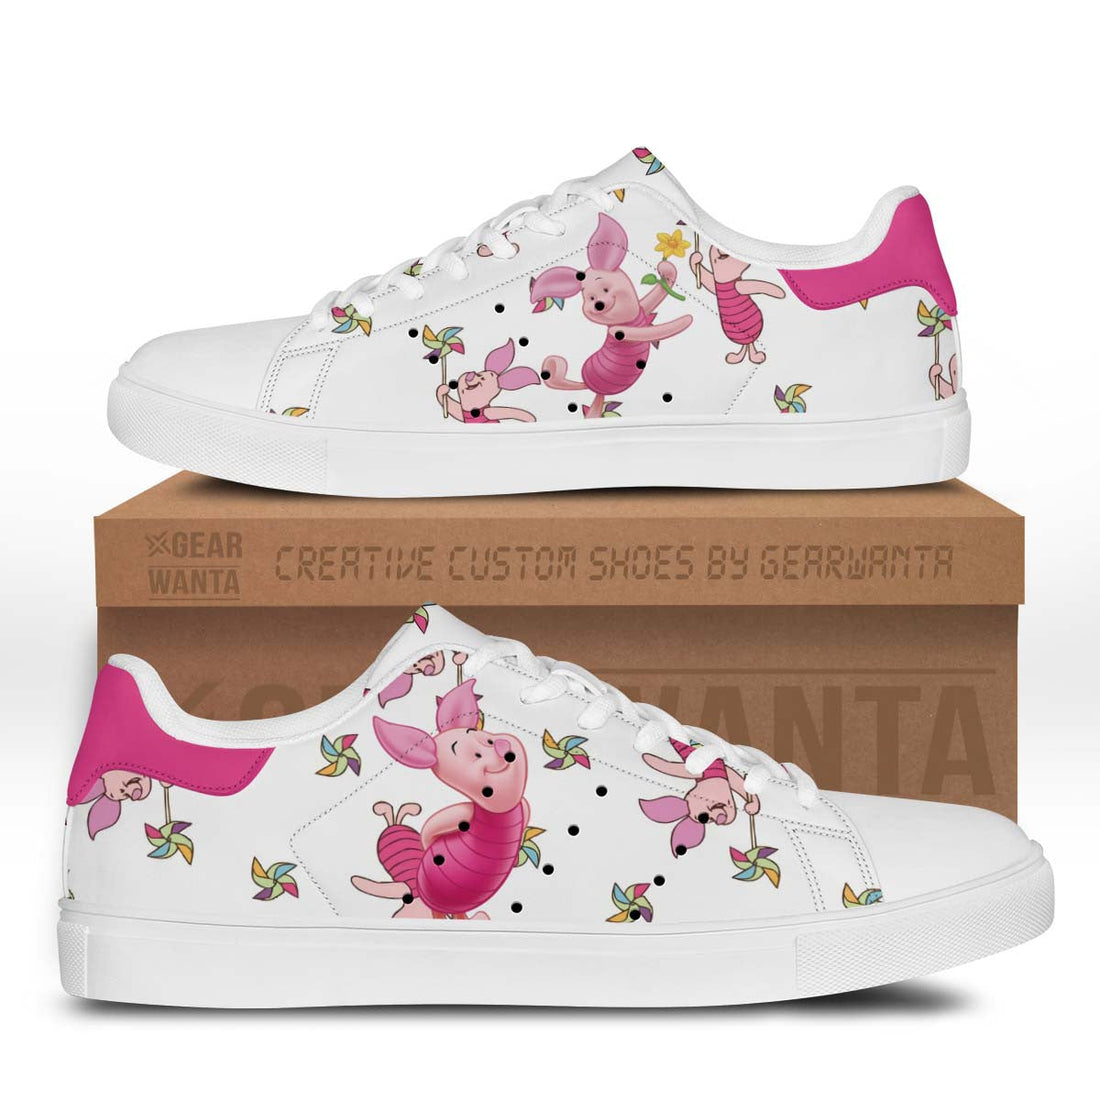 Pigglet Stan Shoes Custom Winnie The Pooh Sneakers-Gear Wanta